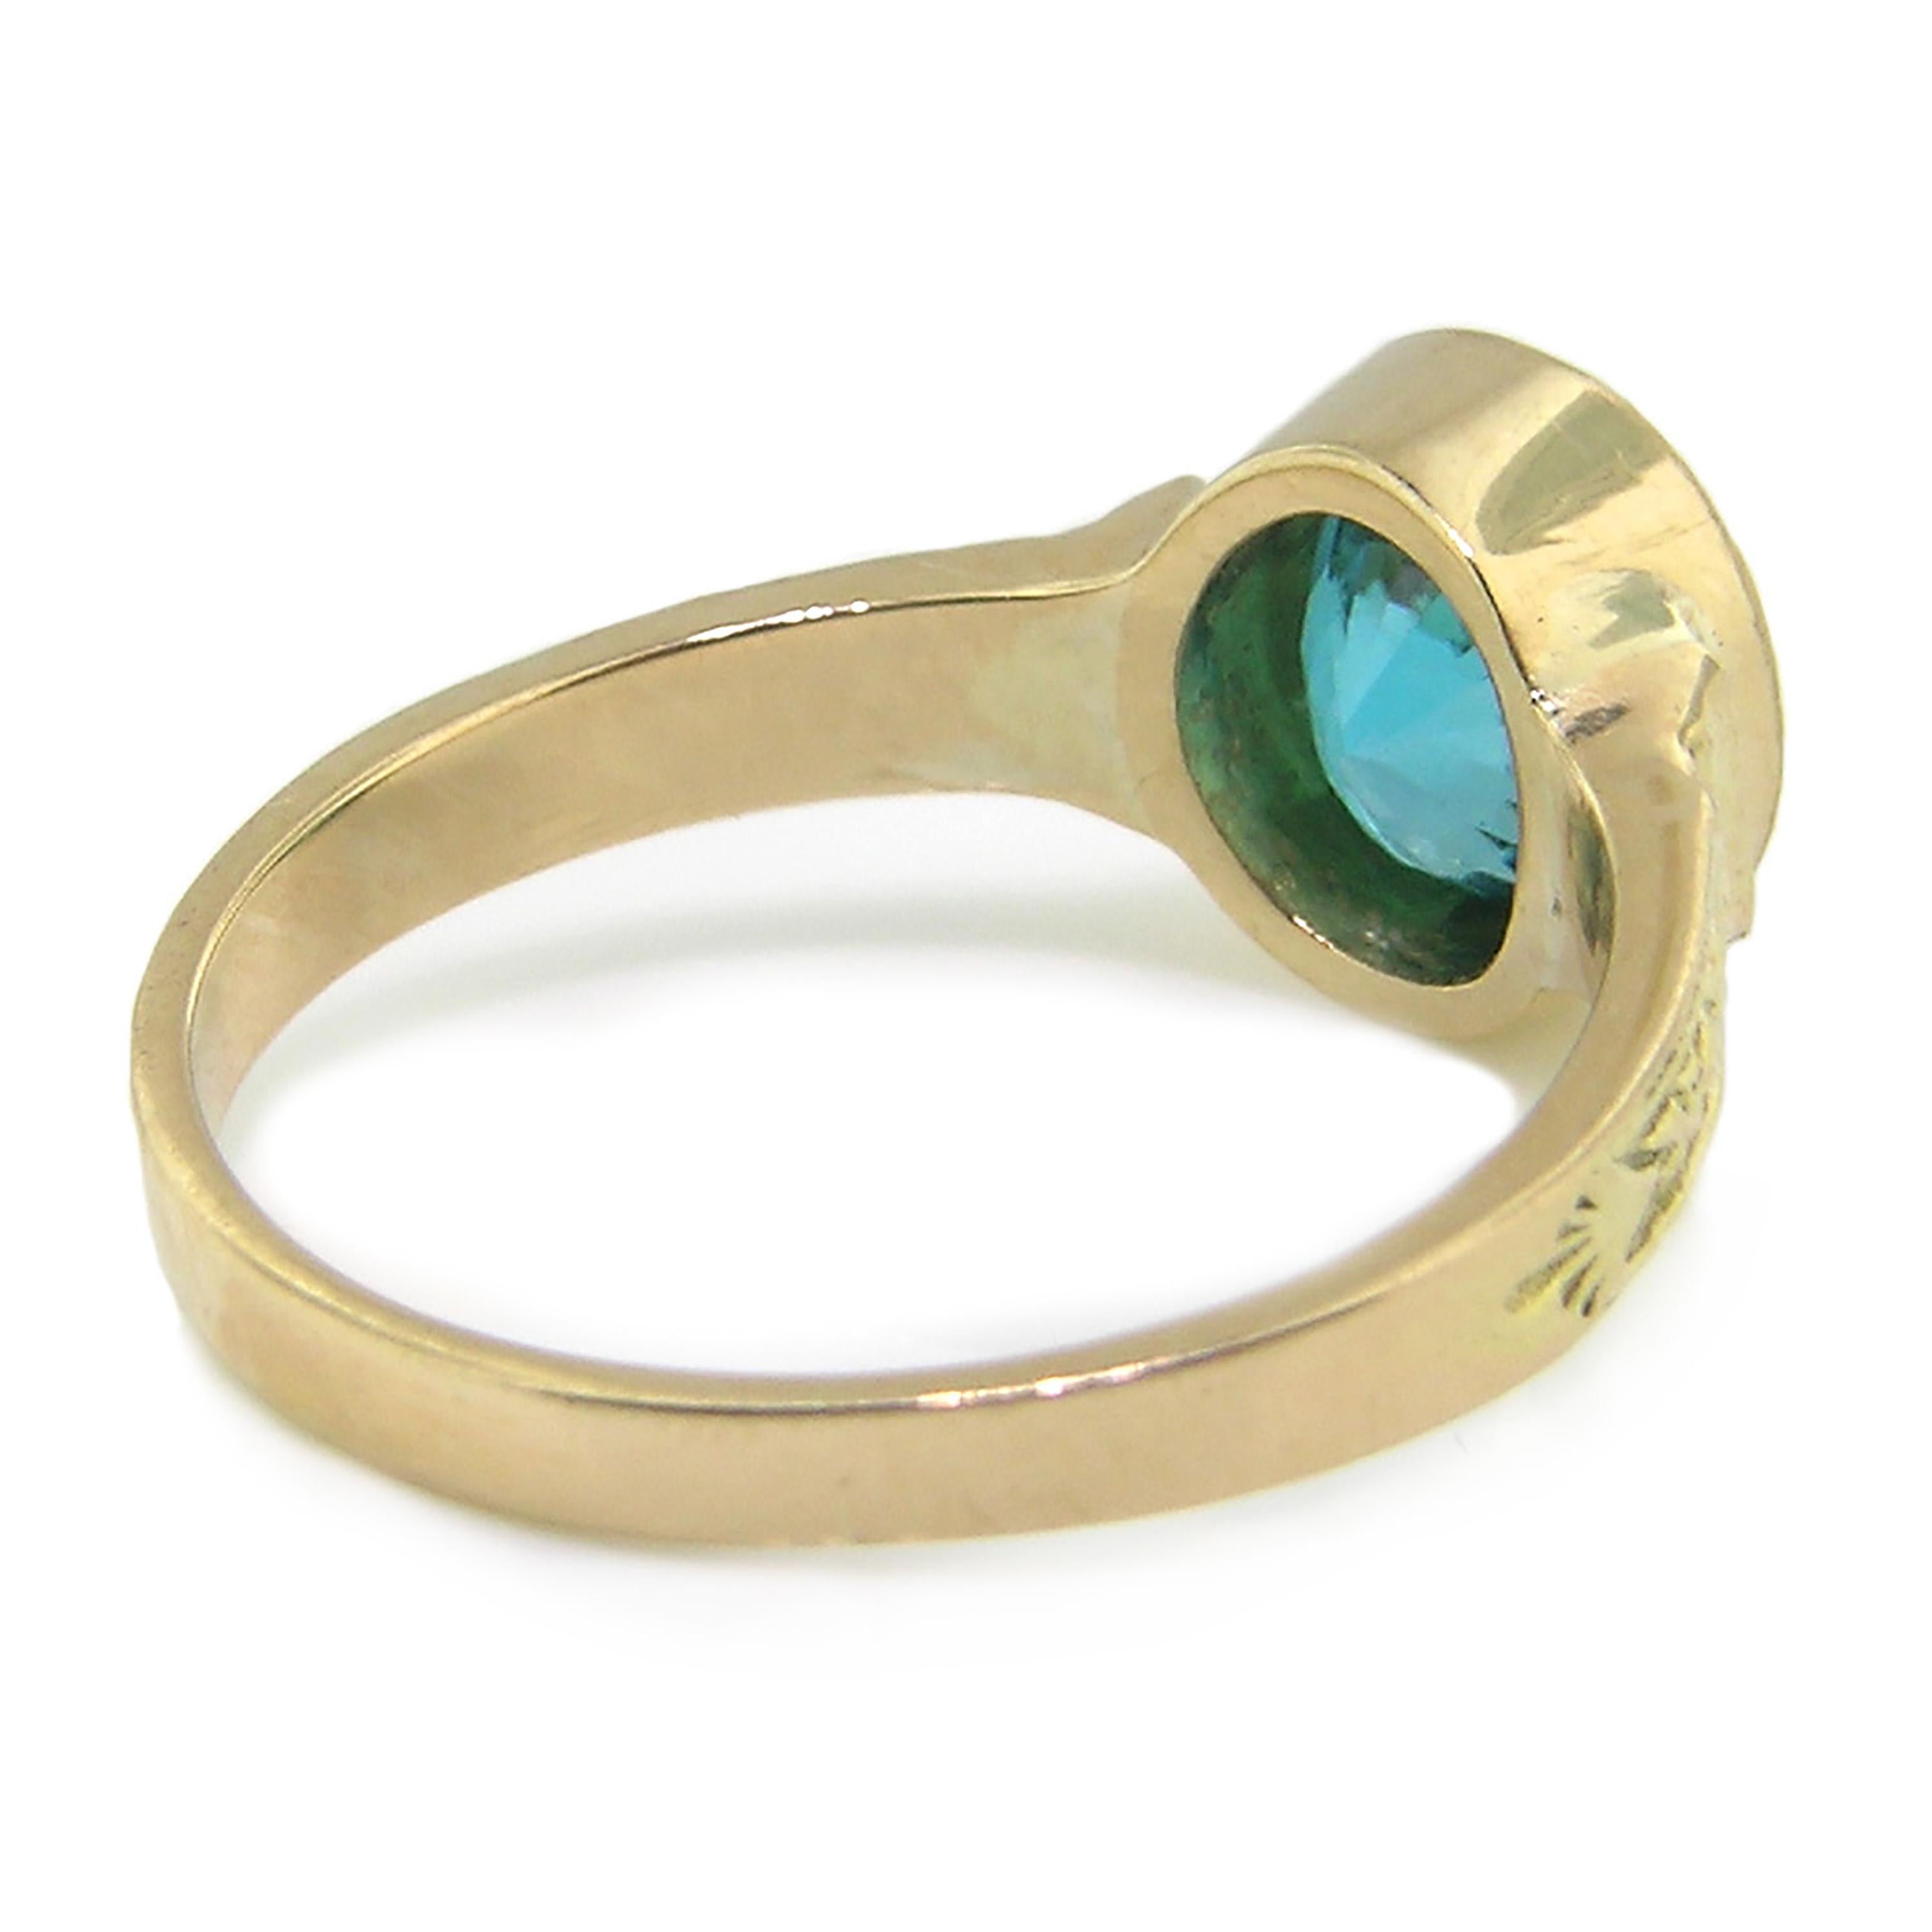 Oval Cut Blue Zircon and 18 Karat Gold Ring